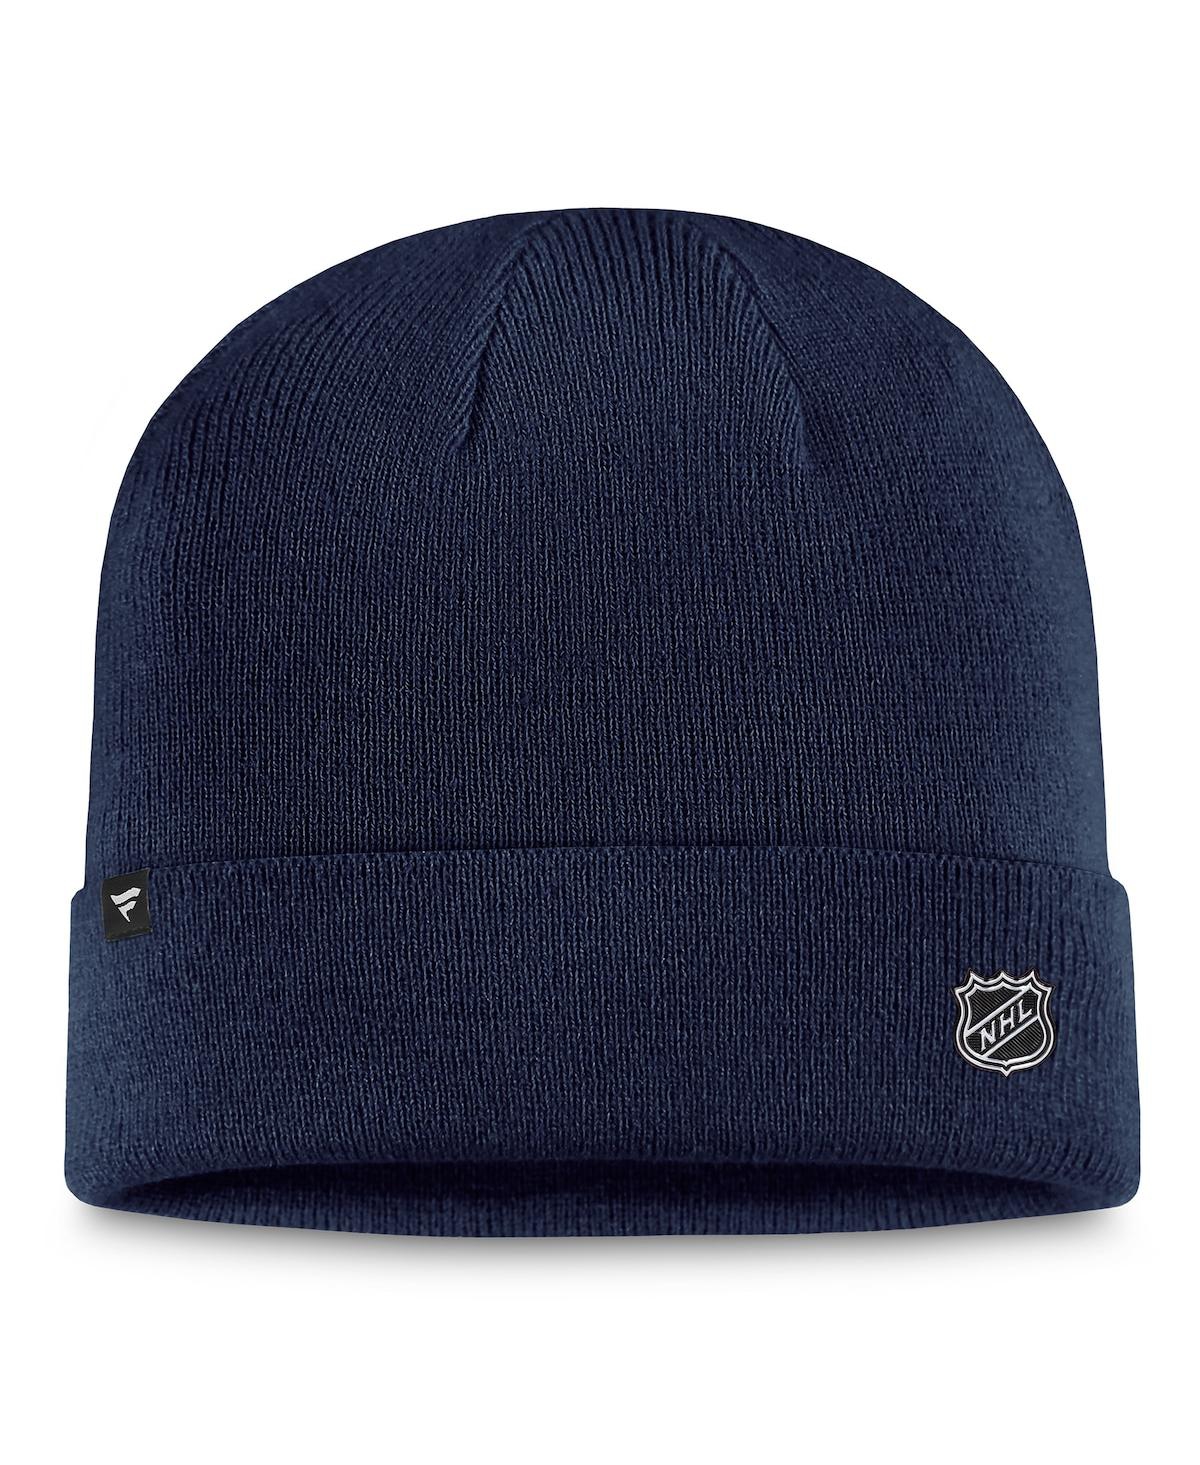 Shop Fanatics Men's  Navy Washington Capitals Authentic Pro Cuffed Knit Hat